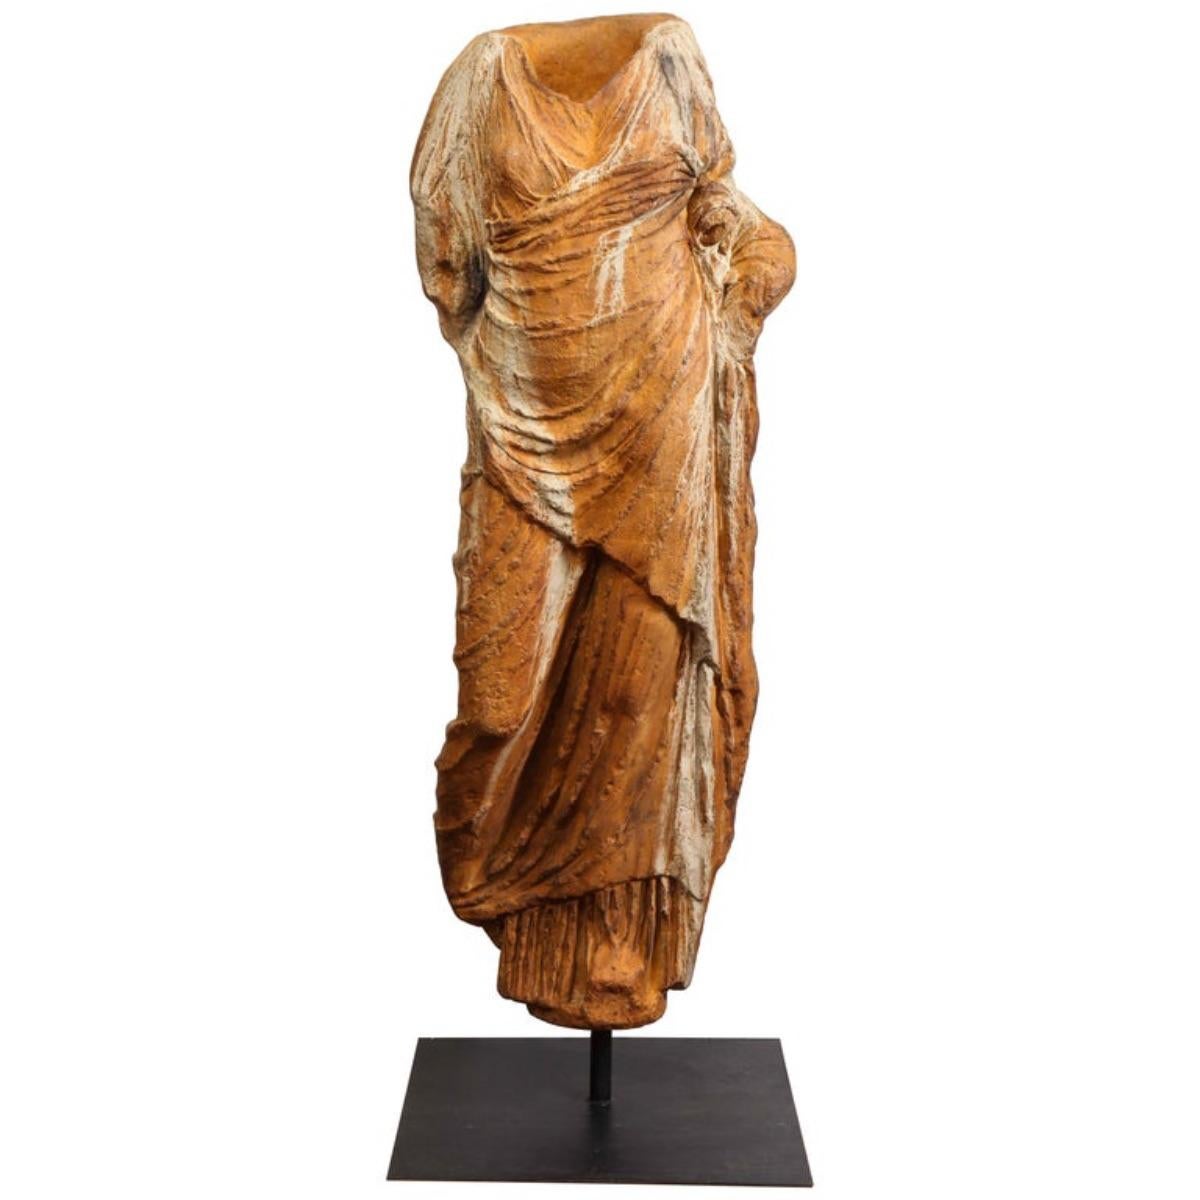 Unknown Figurative Sculpture - Life-Size Roman Style Patinated Fiberglass Torso, after the Antique